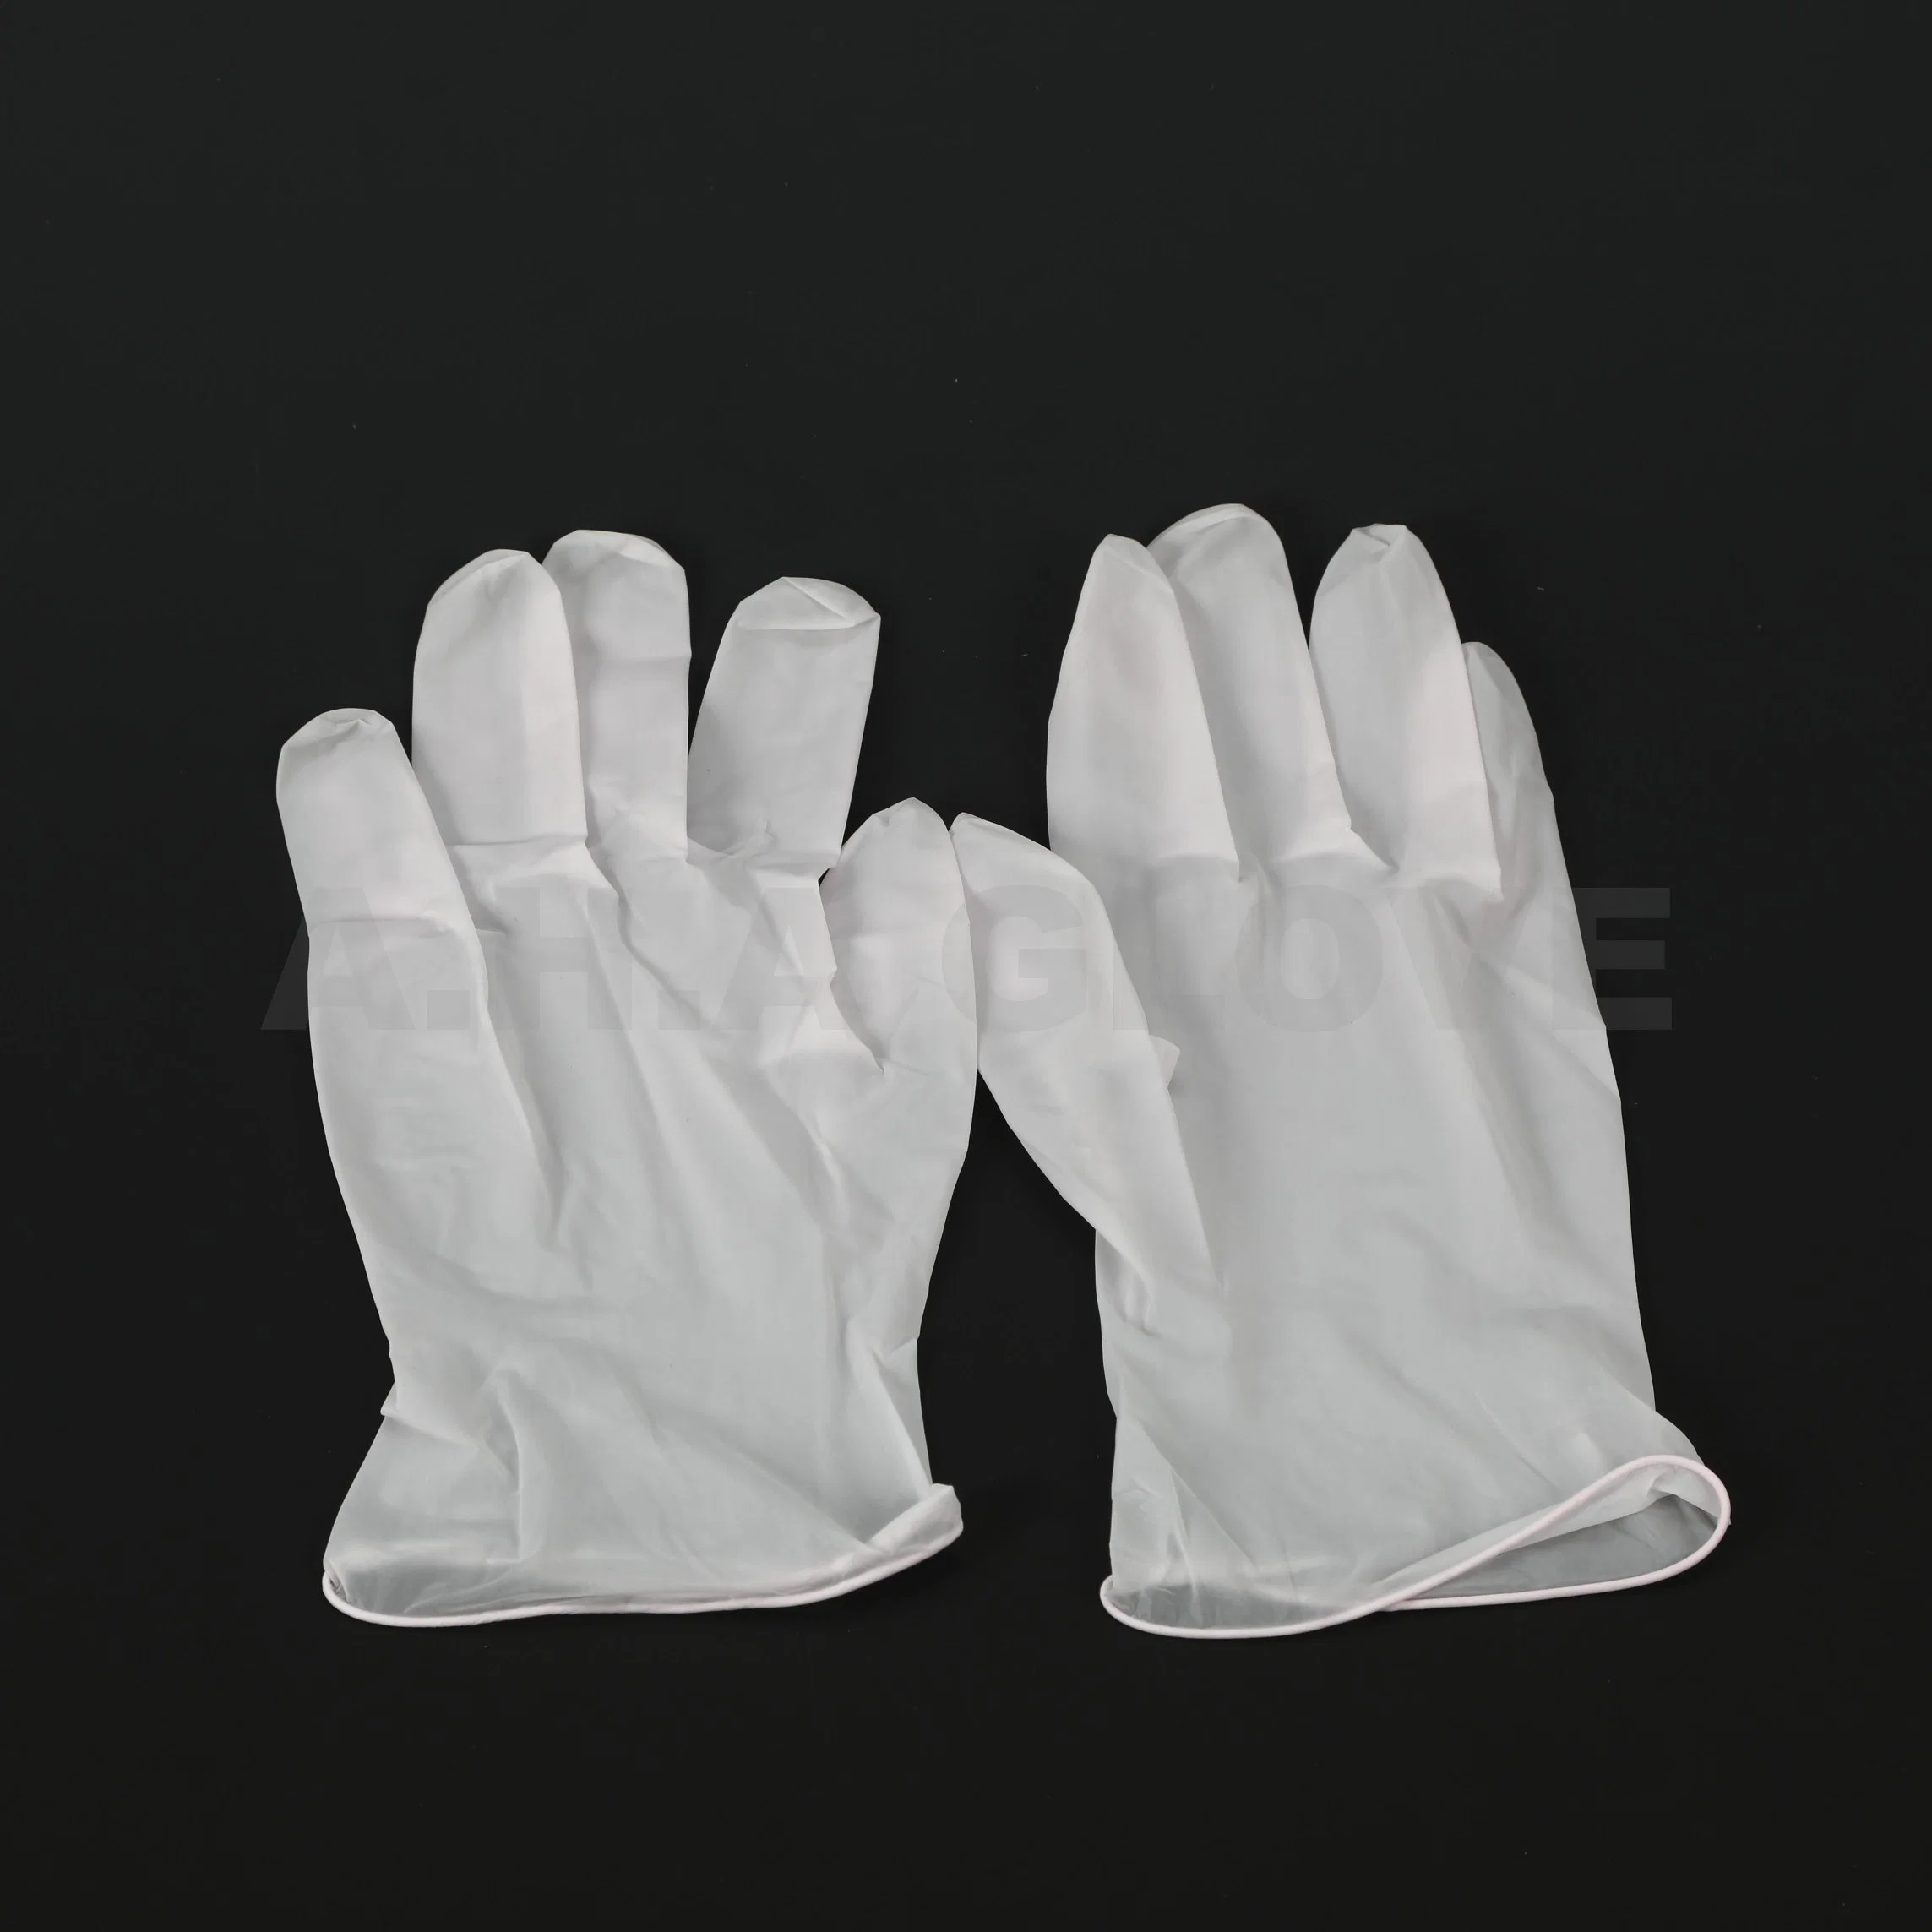 Cheap Clear Hand Glove Disposable PVC (Vinyl) Examination Gloves Powder Free Transparent